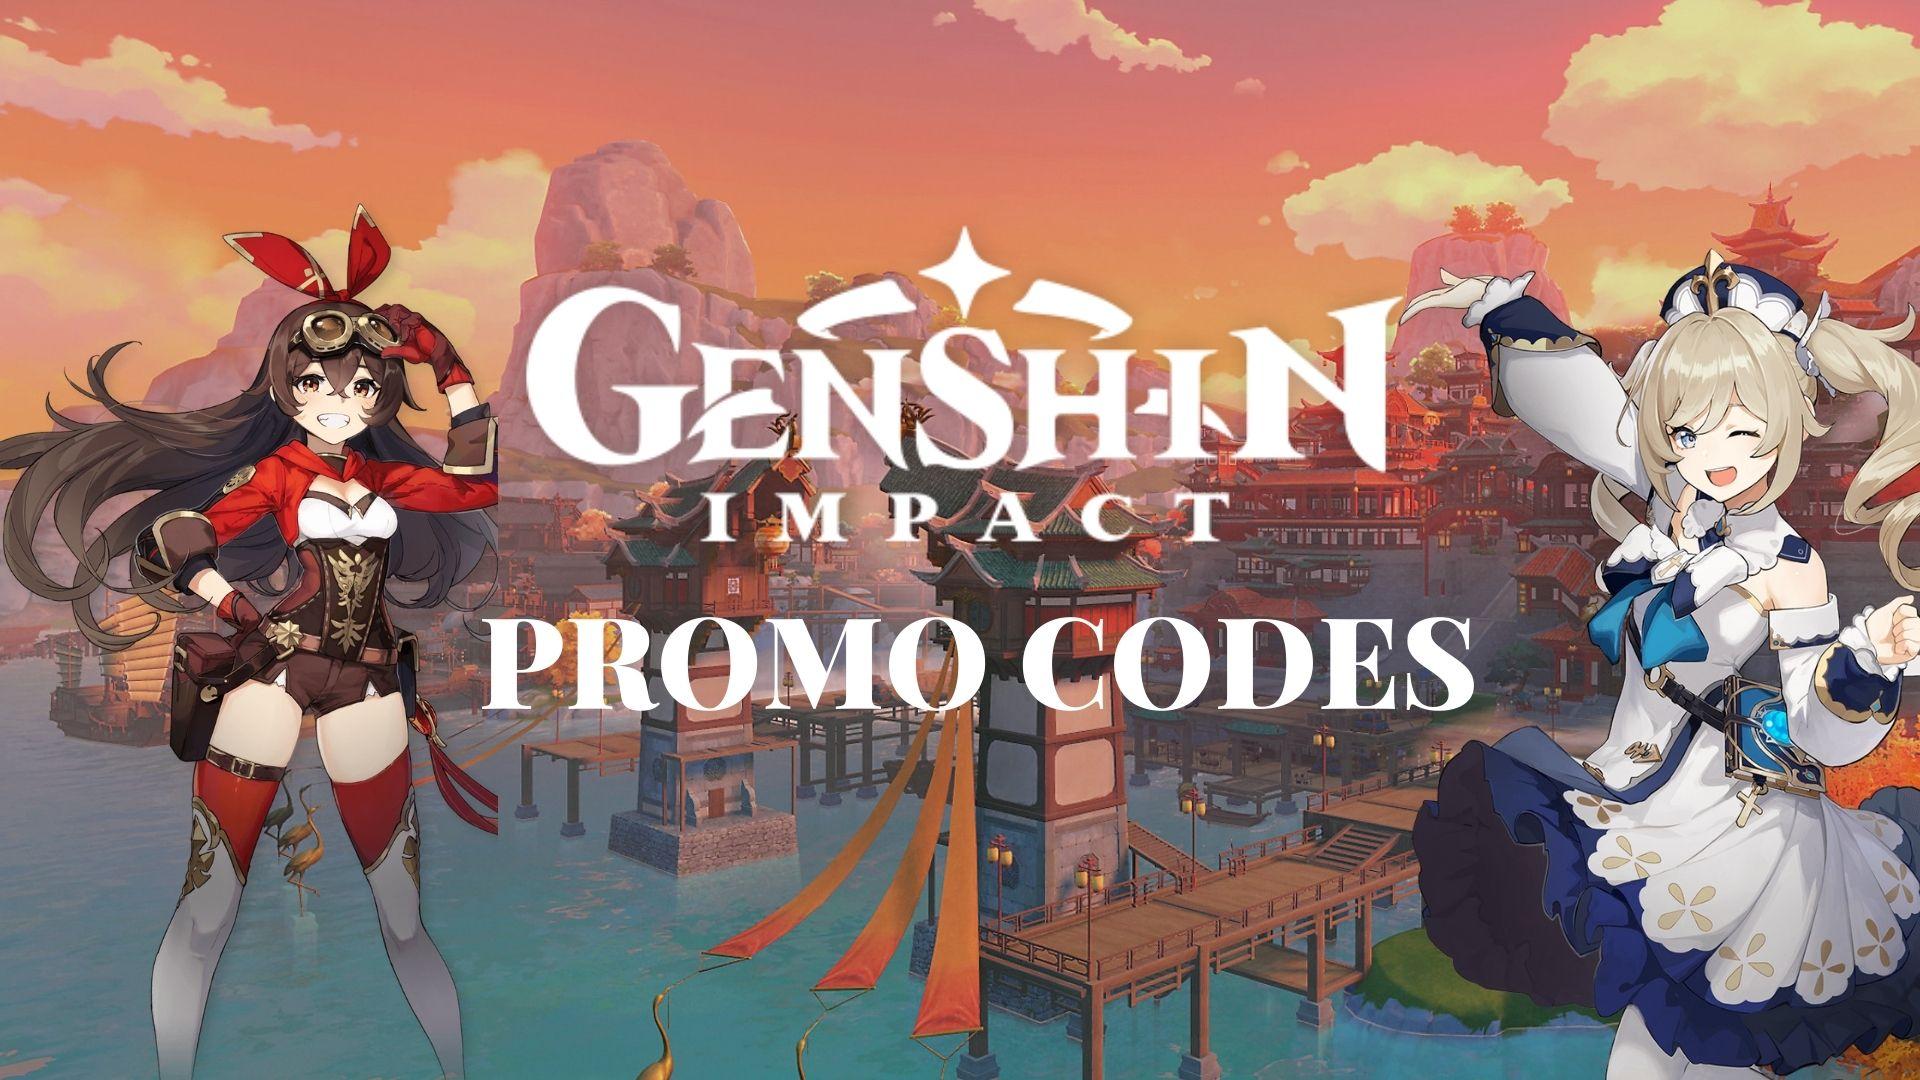 new redemption code Genshin Impact